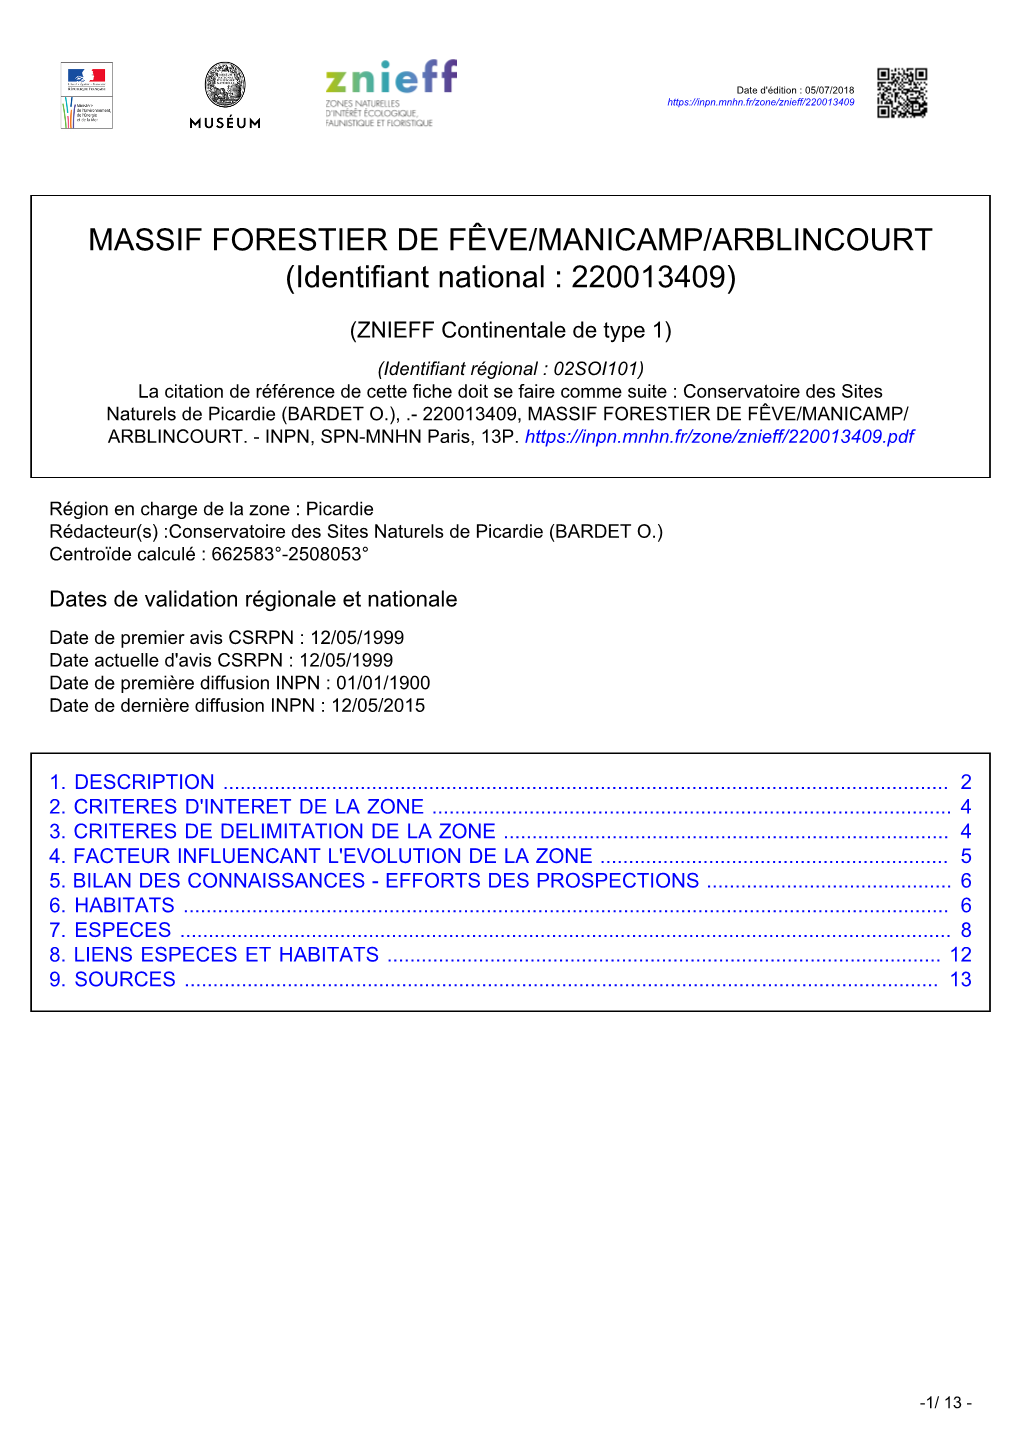 MASSIF FORESTIER DE FÊVE/MANICAMP/ARBLINCOURT (Identifiant National : 220013409)